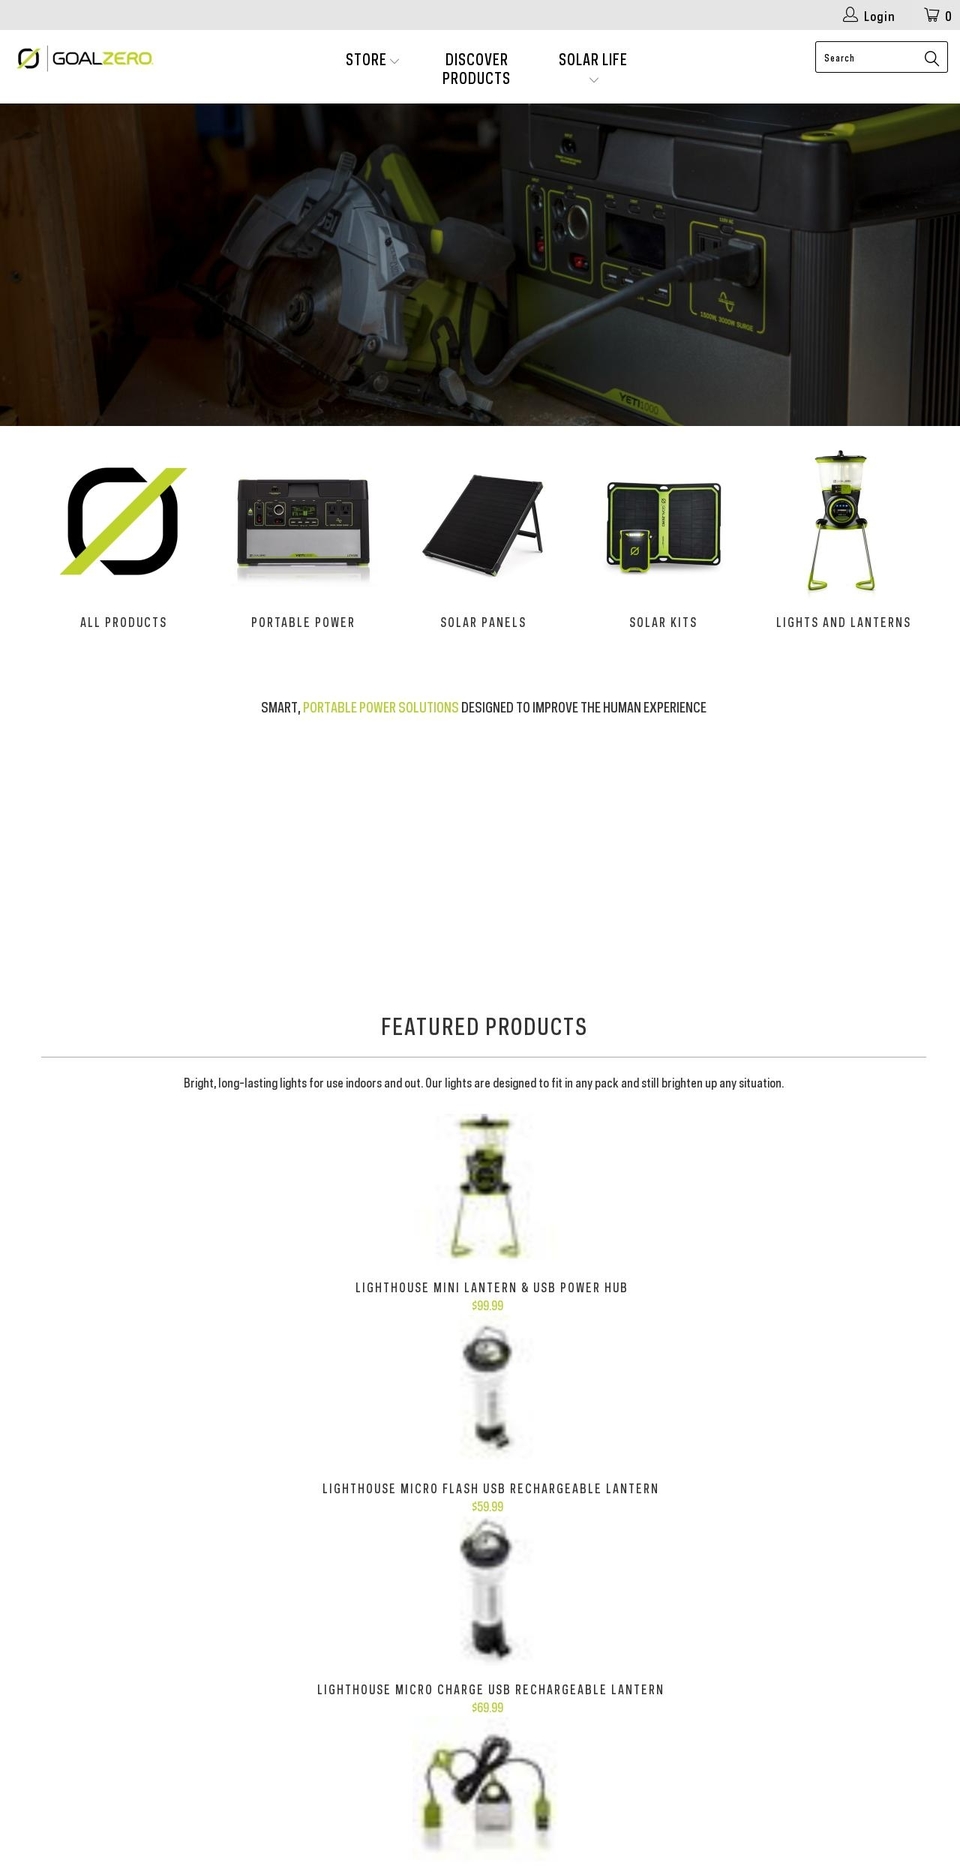 goalzero.co.nz shopify website screenshot